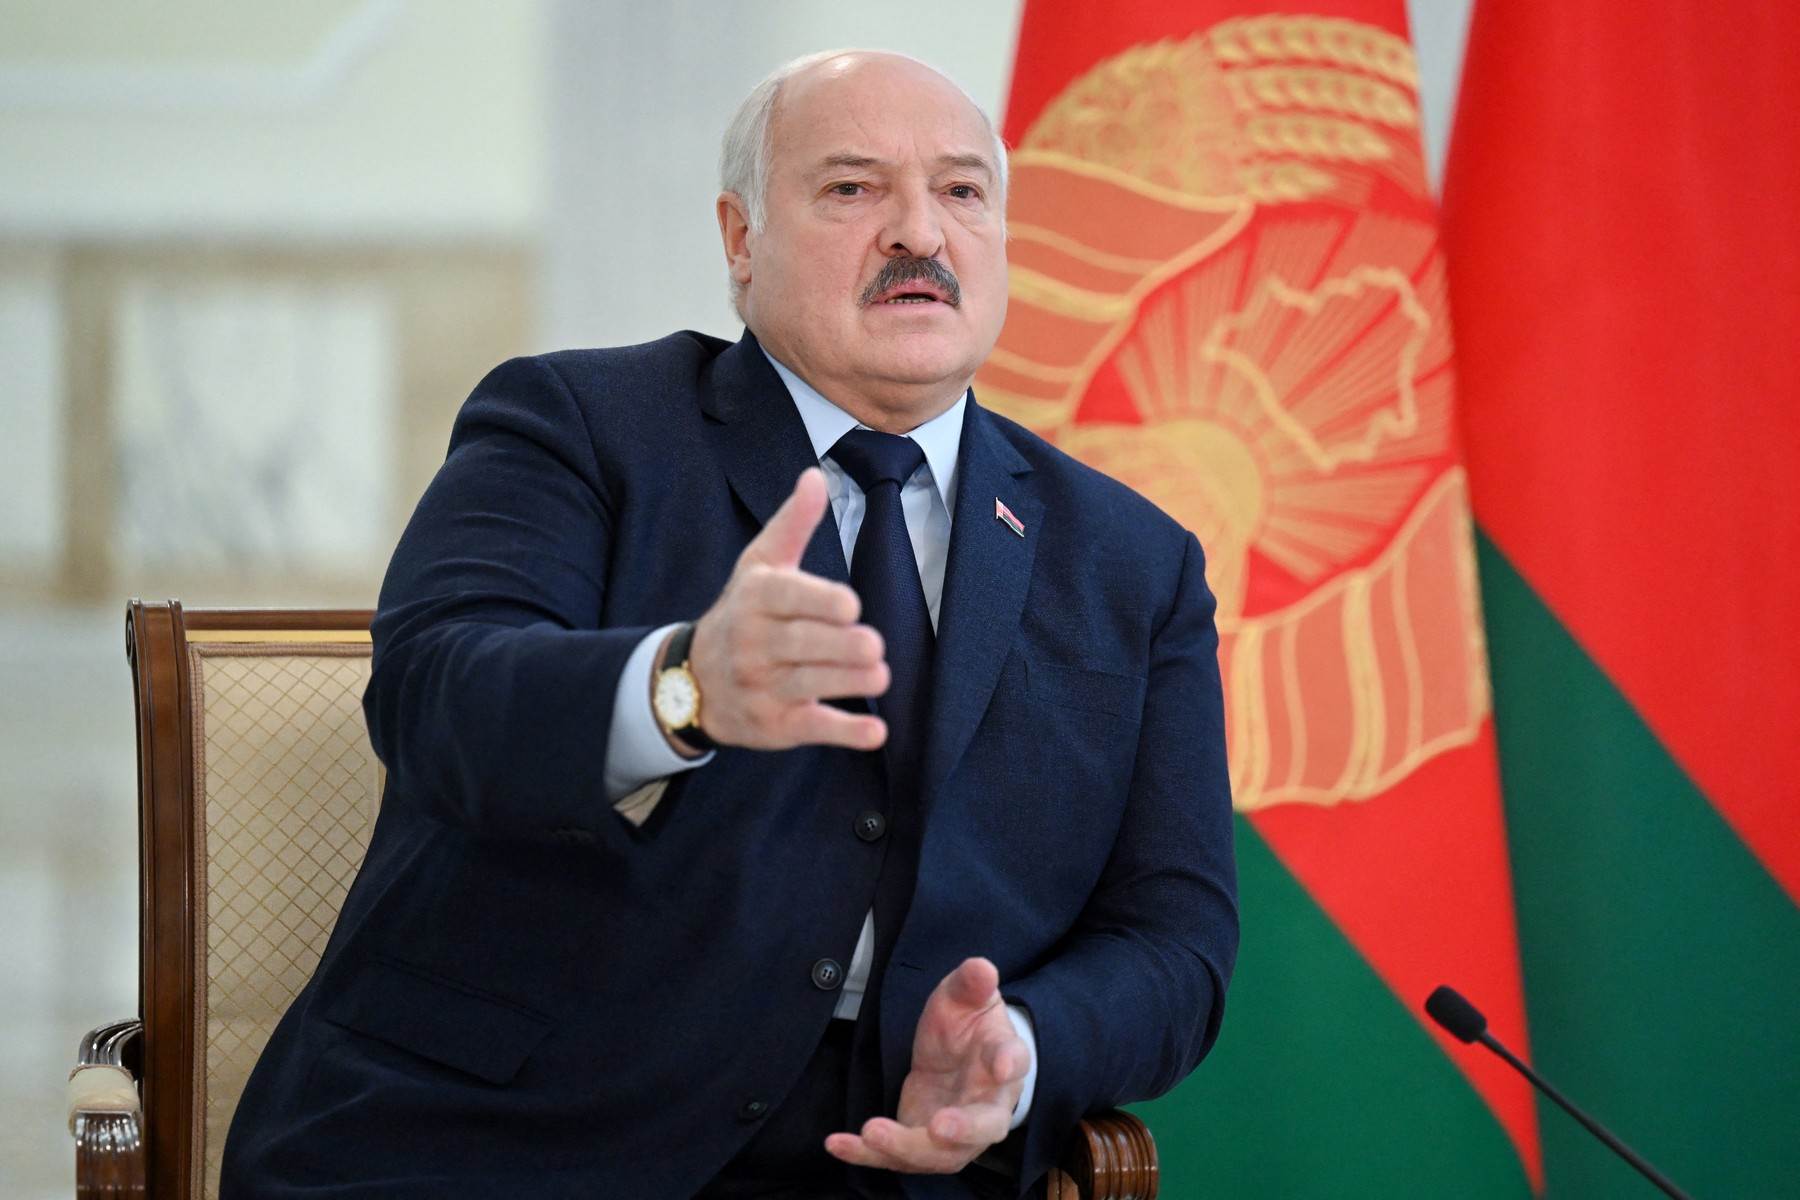  Bjeloruski predsjednik Aleksandar Lukašenko 